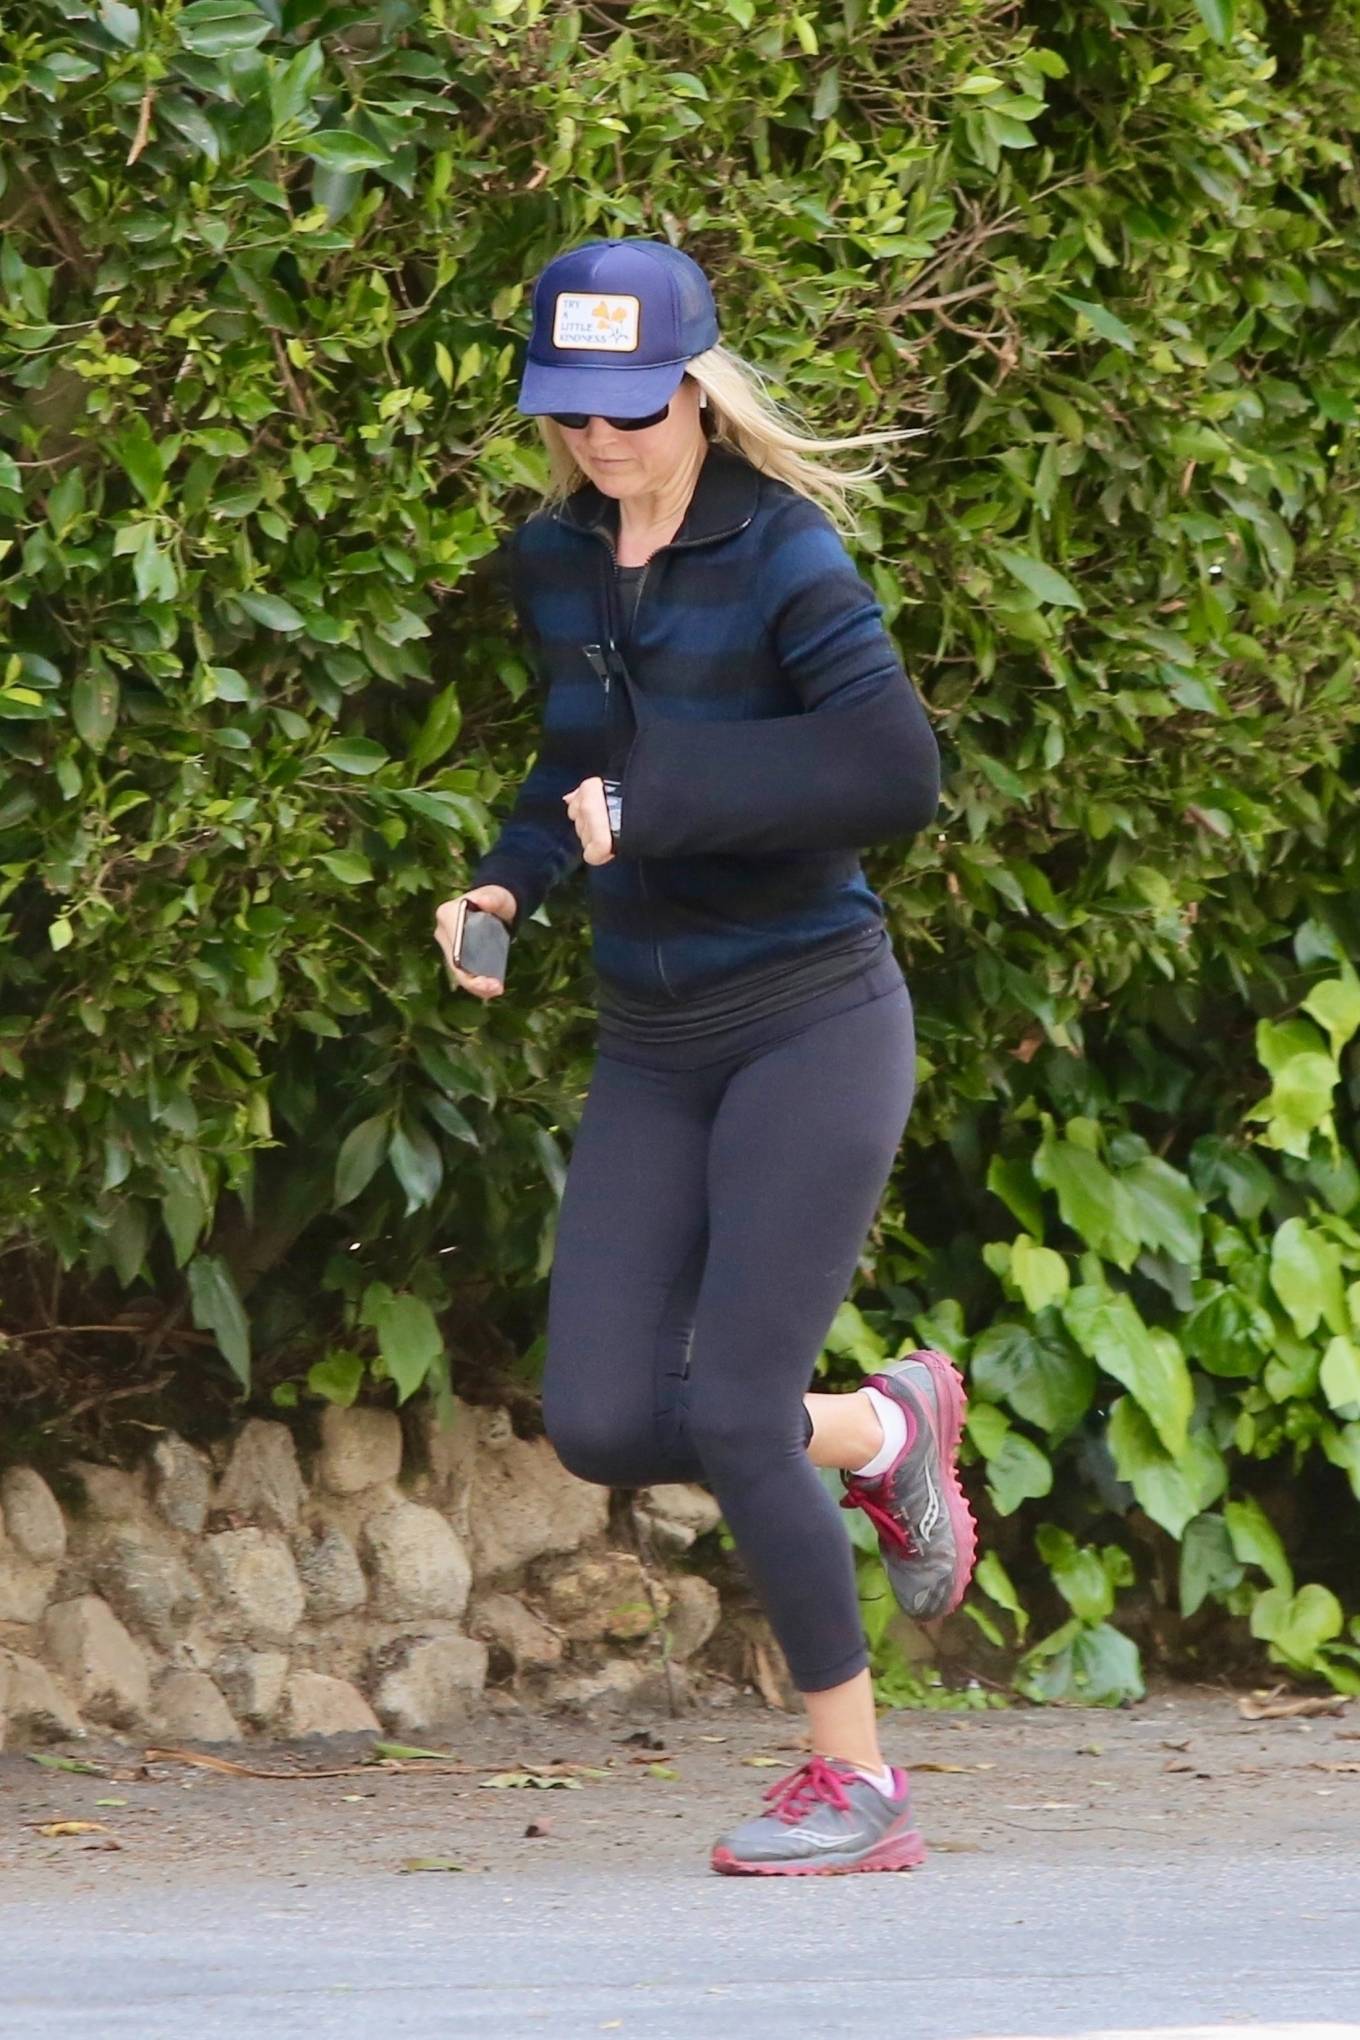 Ali Larter â€“ Sports a brace on her broken wrist during jogging